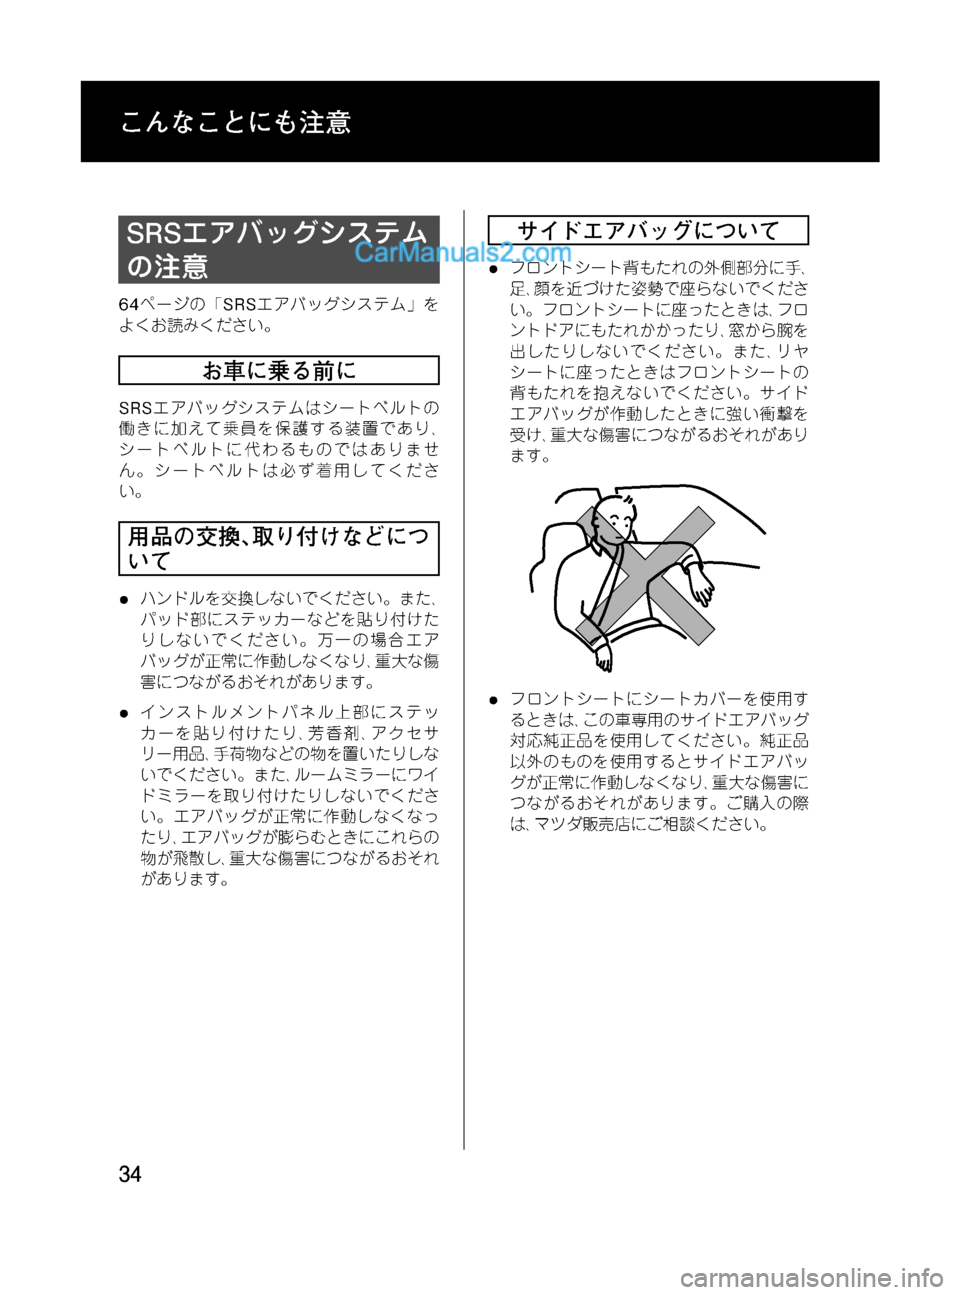 MAZDA MODEL VERISA 2007  ベリーサ｜取扱説明書 (in Japanese) Black plate (34,1)
SRSエアバッグシステム
の注意
64ページの「SRSエアバッグシステム」を
よくお読みください。
お車に乗る前に
SRSエアバッグシステムは